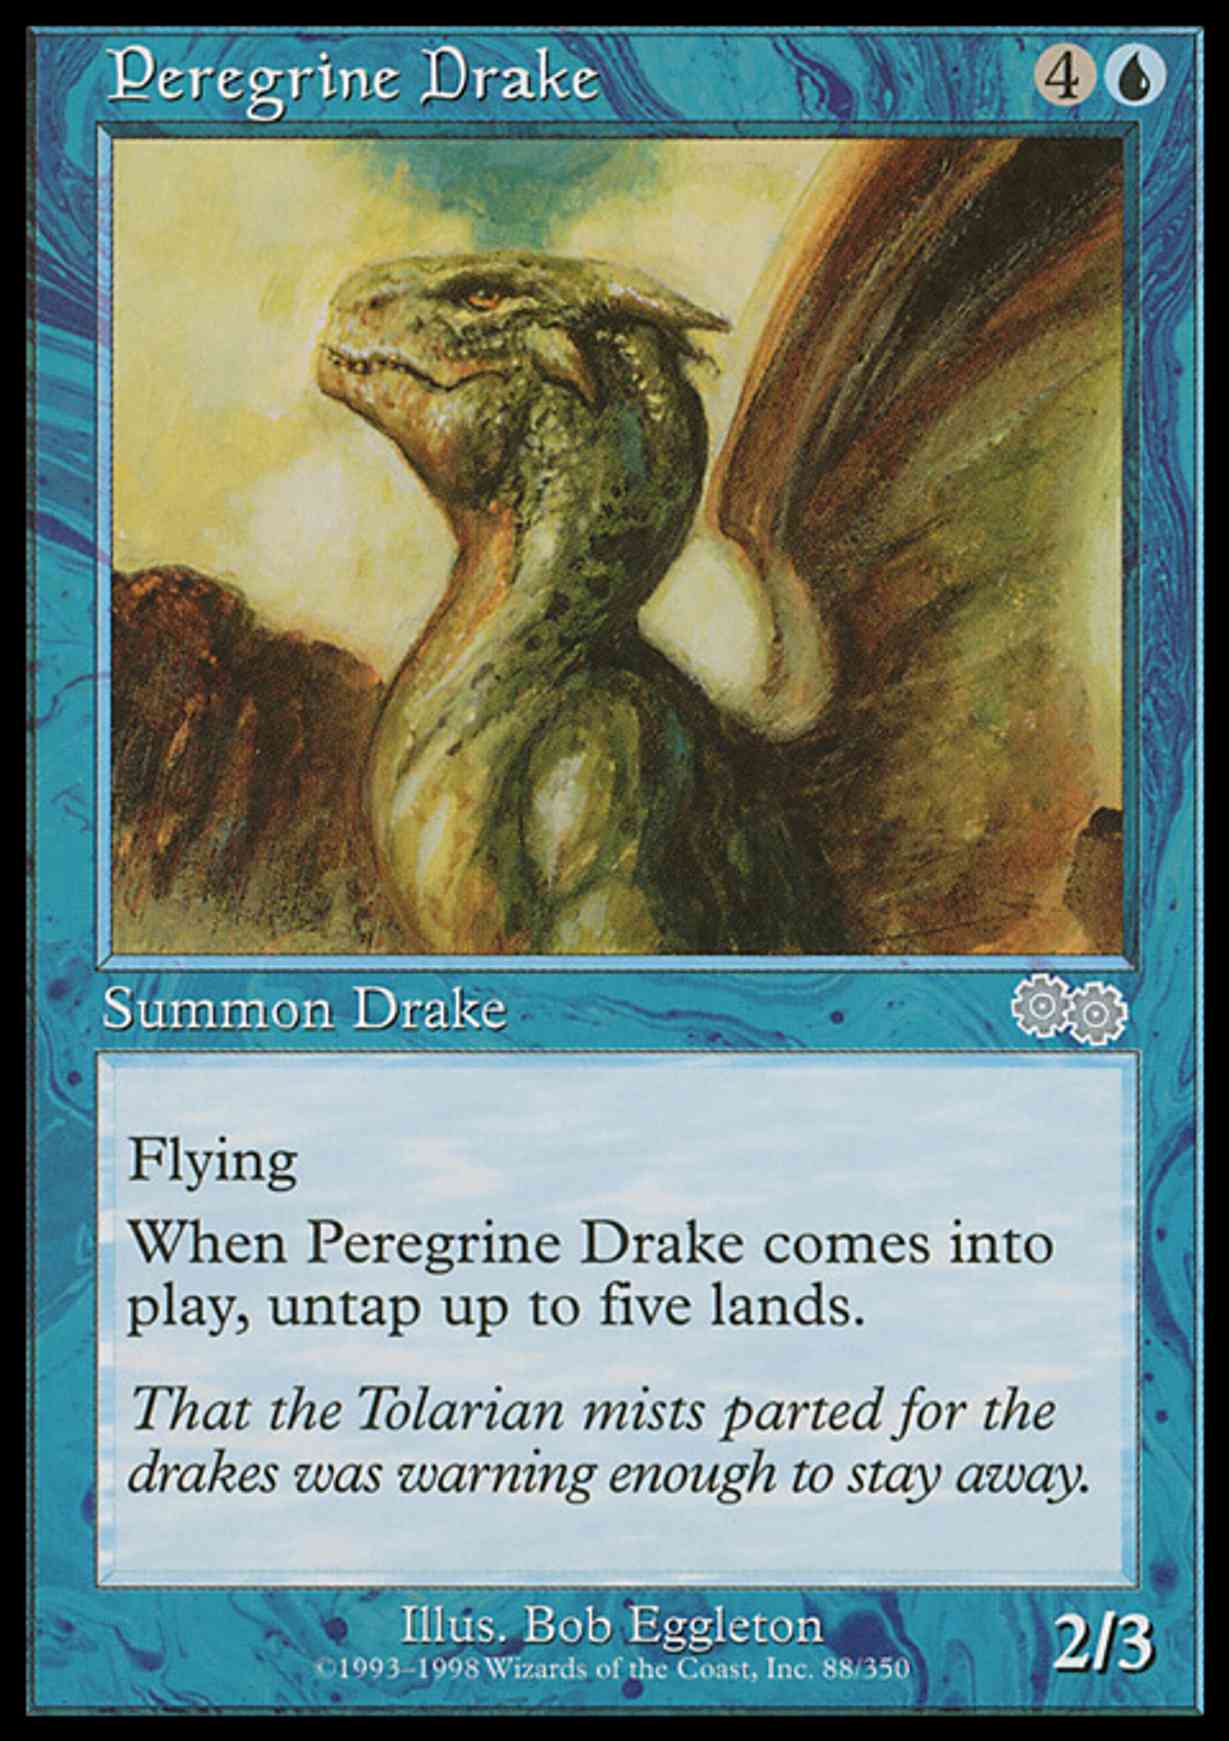 Peregrine Drake magic card front